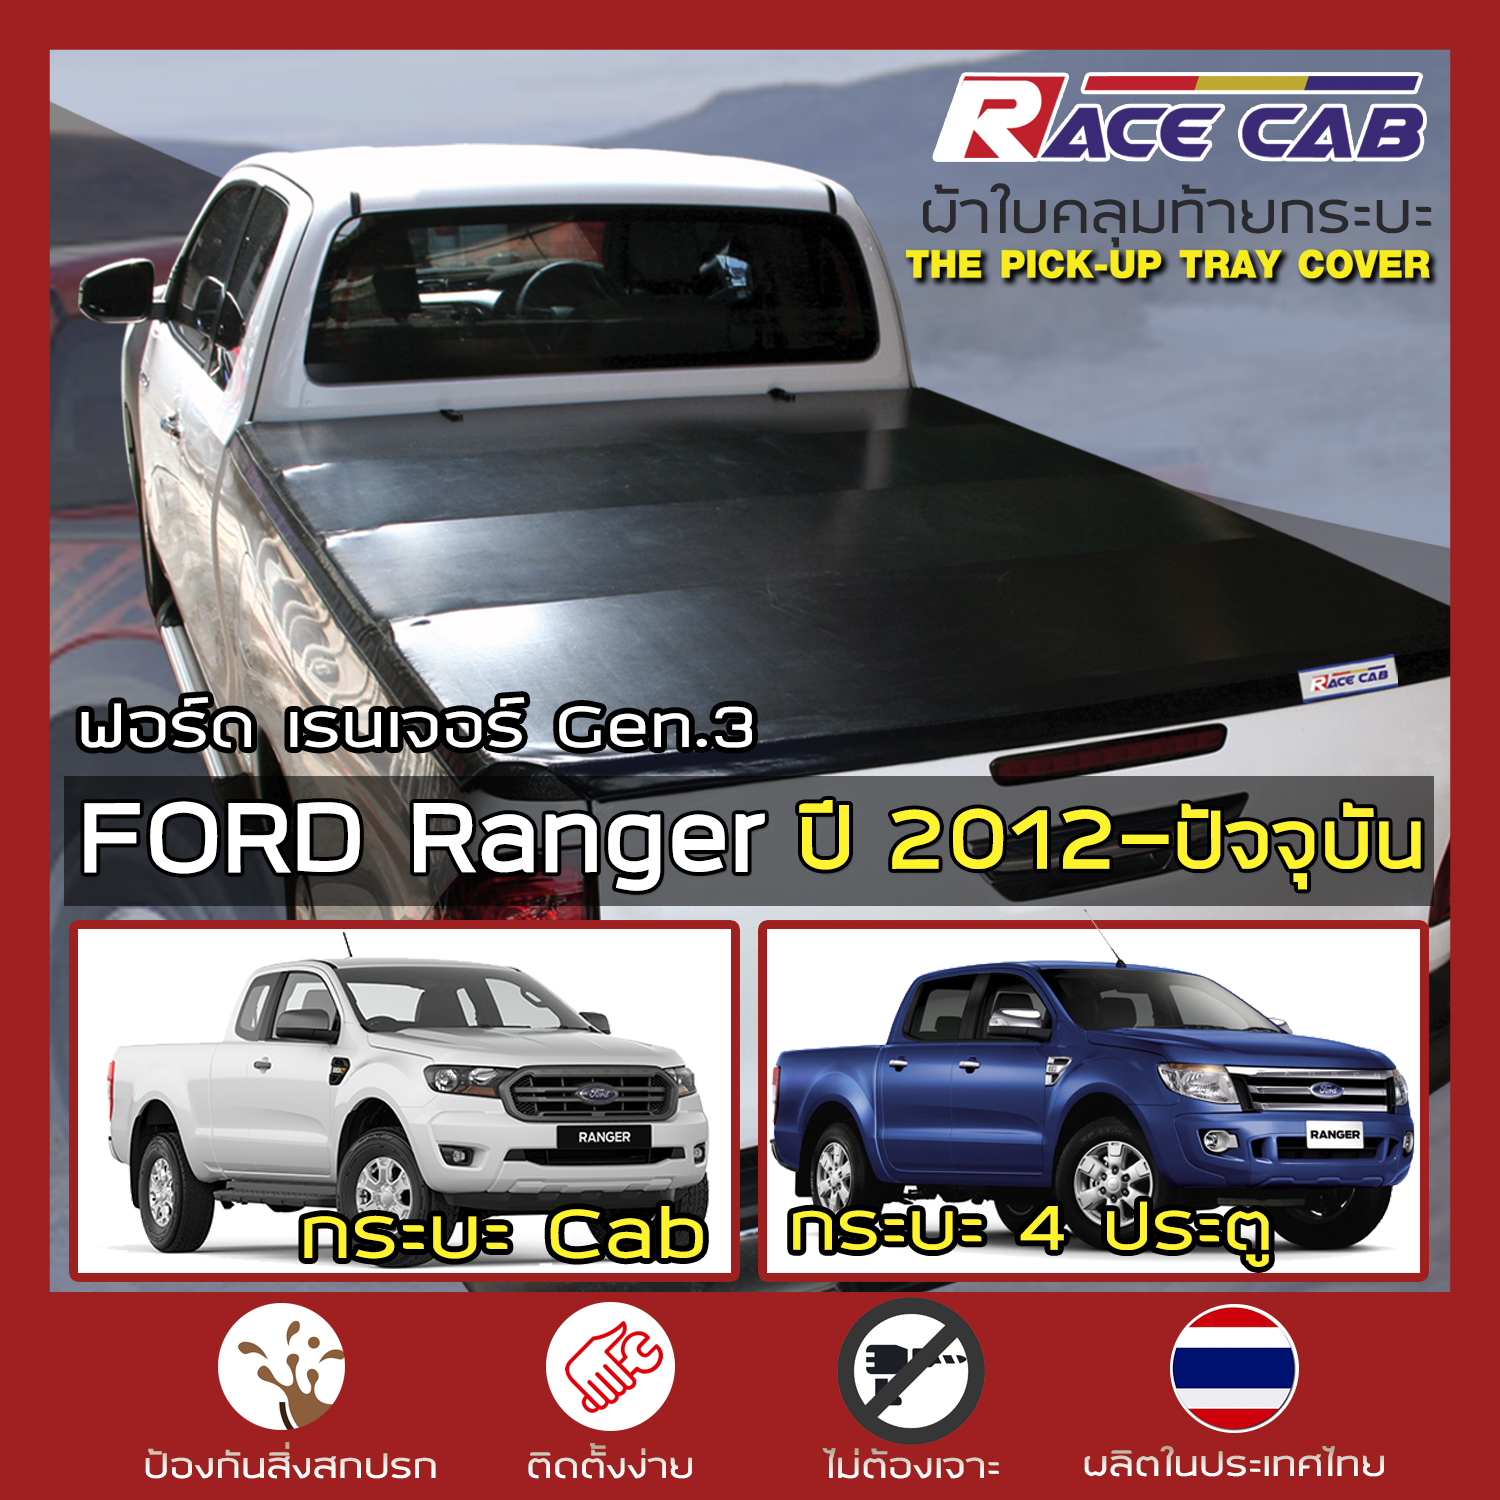 RACE ผ้าใบปิดกระบะ Ranger ปี 2012-ปัจจุบัน Gen.3 ฟอร์ด เรนเจอร์ Ford Pickup Tonneau Cover - ผ้าใบคุณภาพ ครบชุดพร้อมติดตั้ง